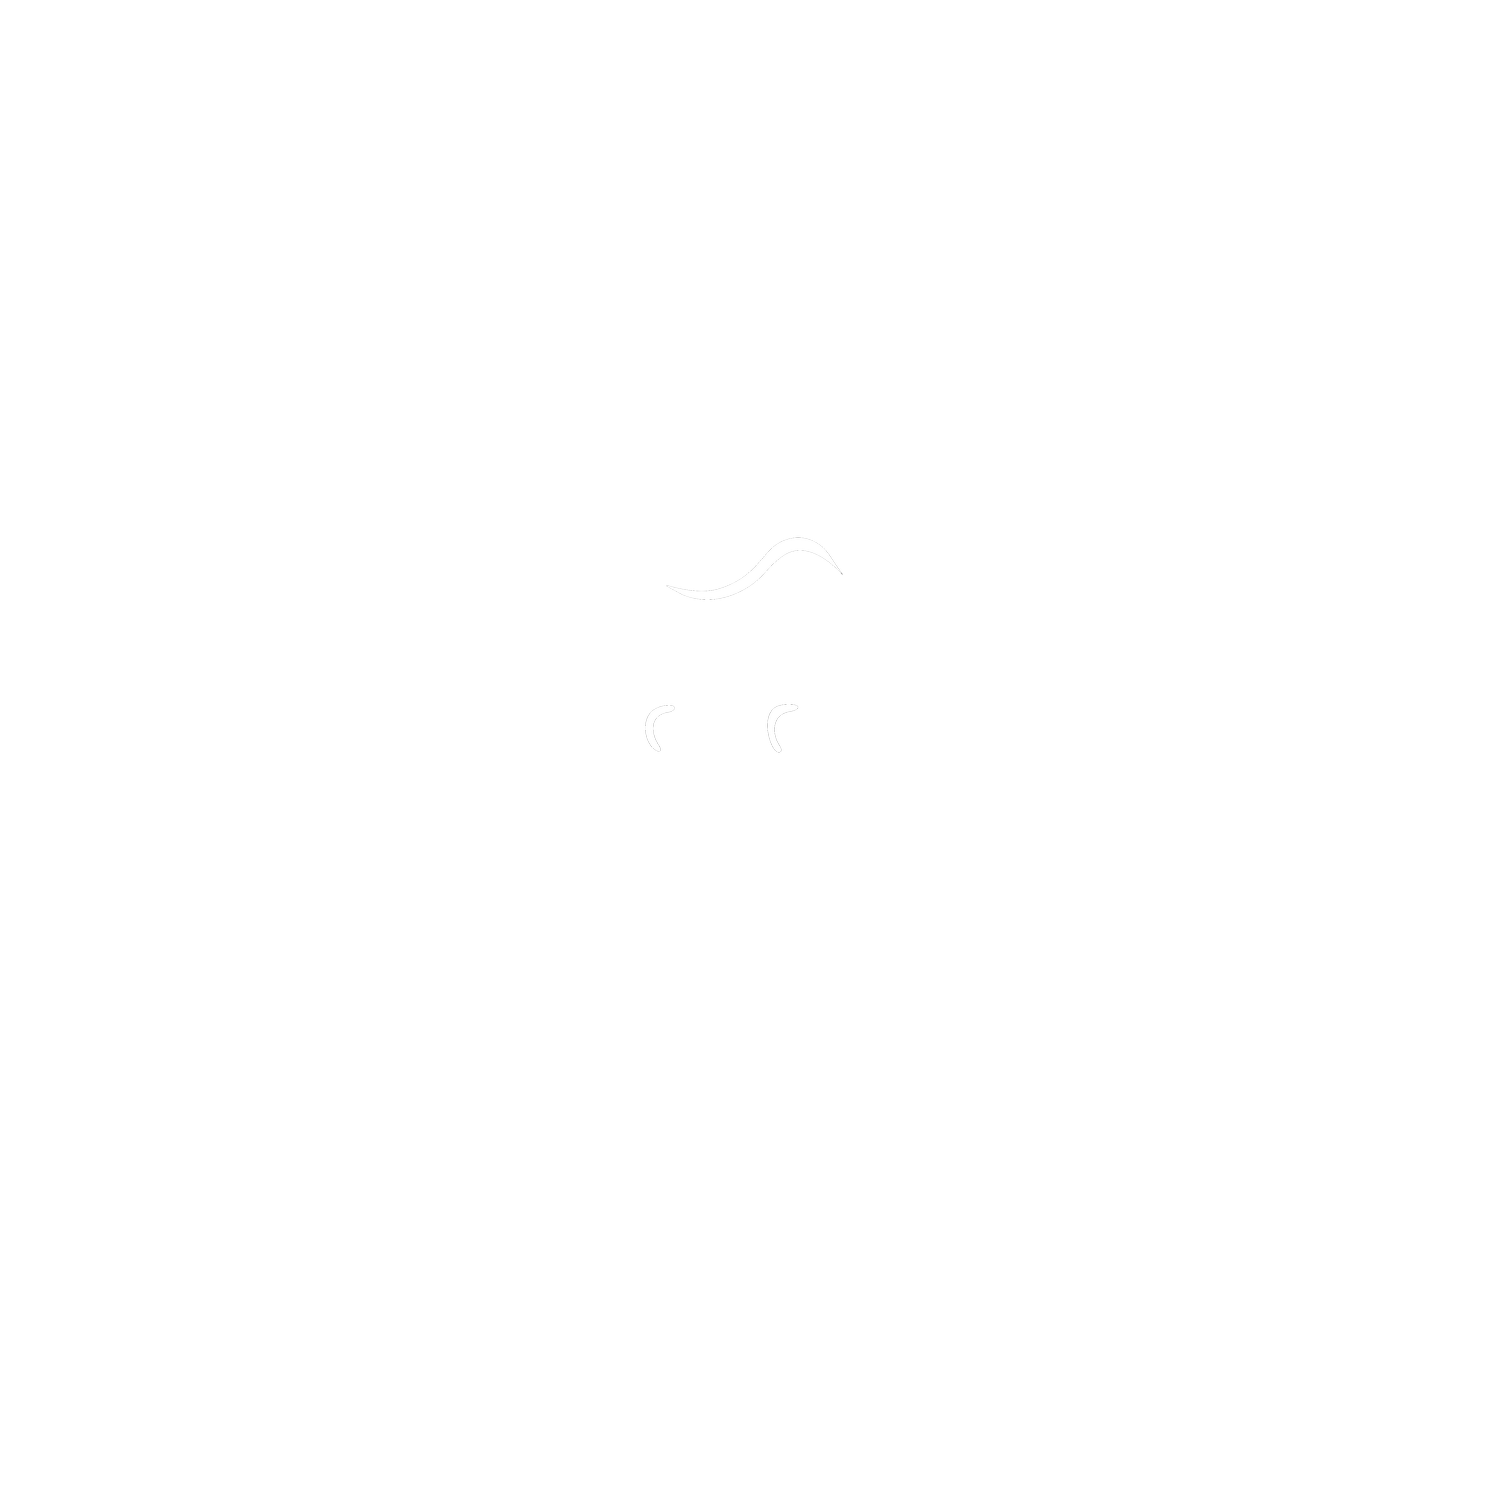 Macklin Brewing Company